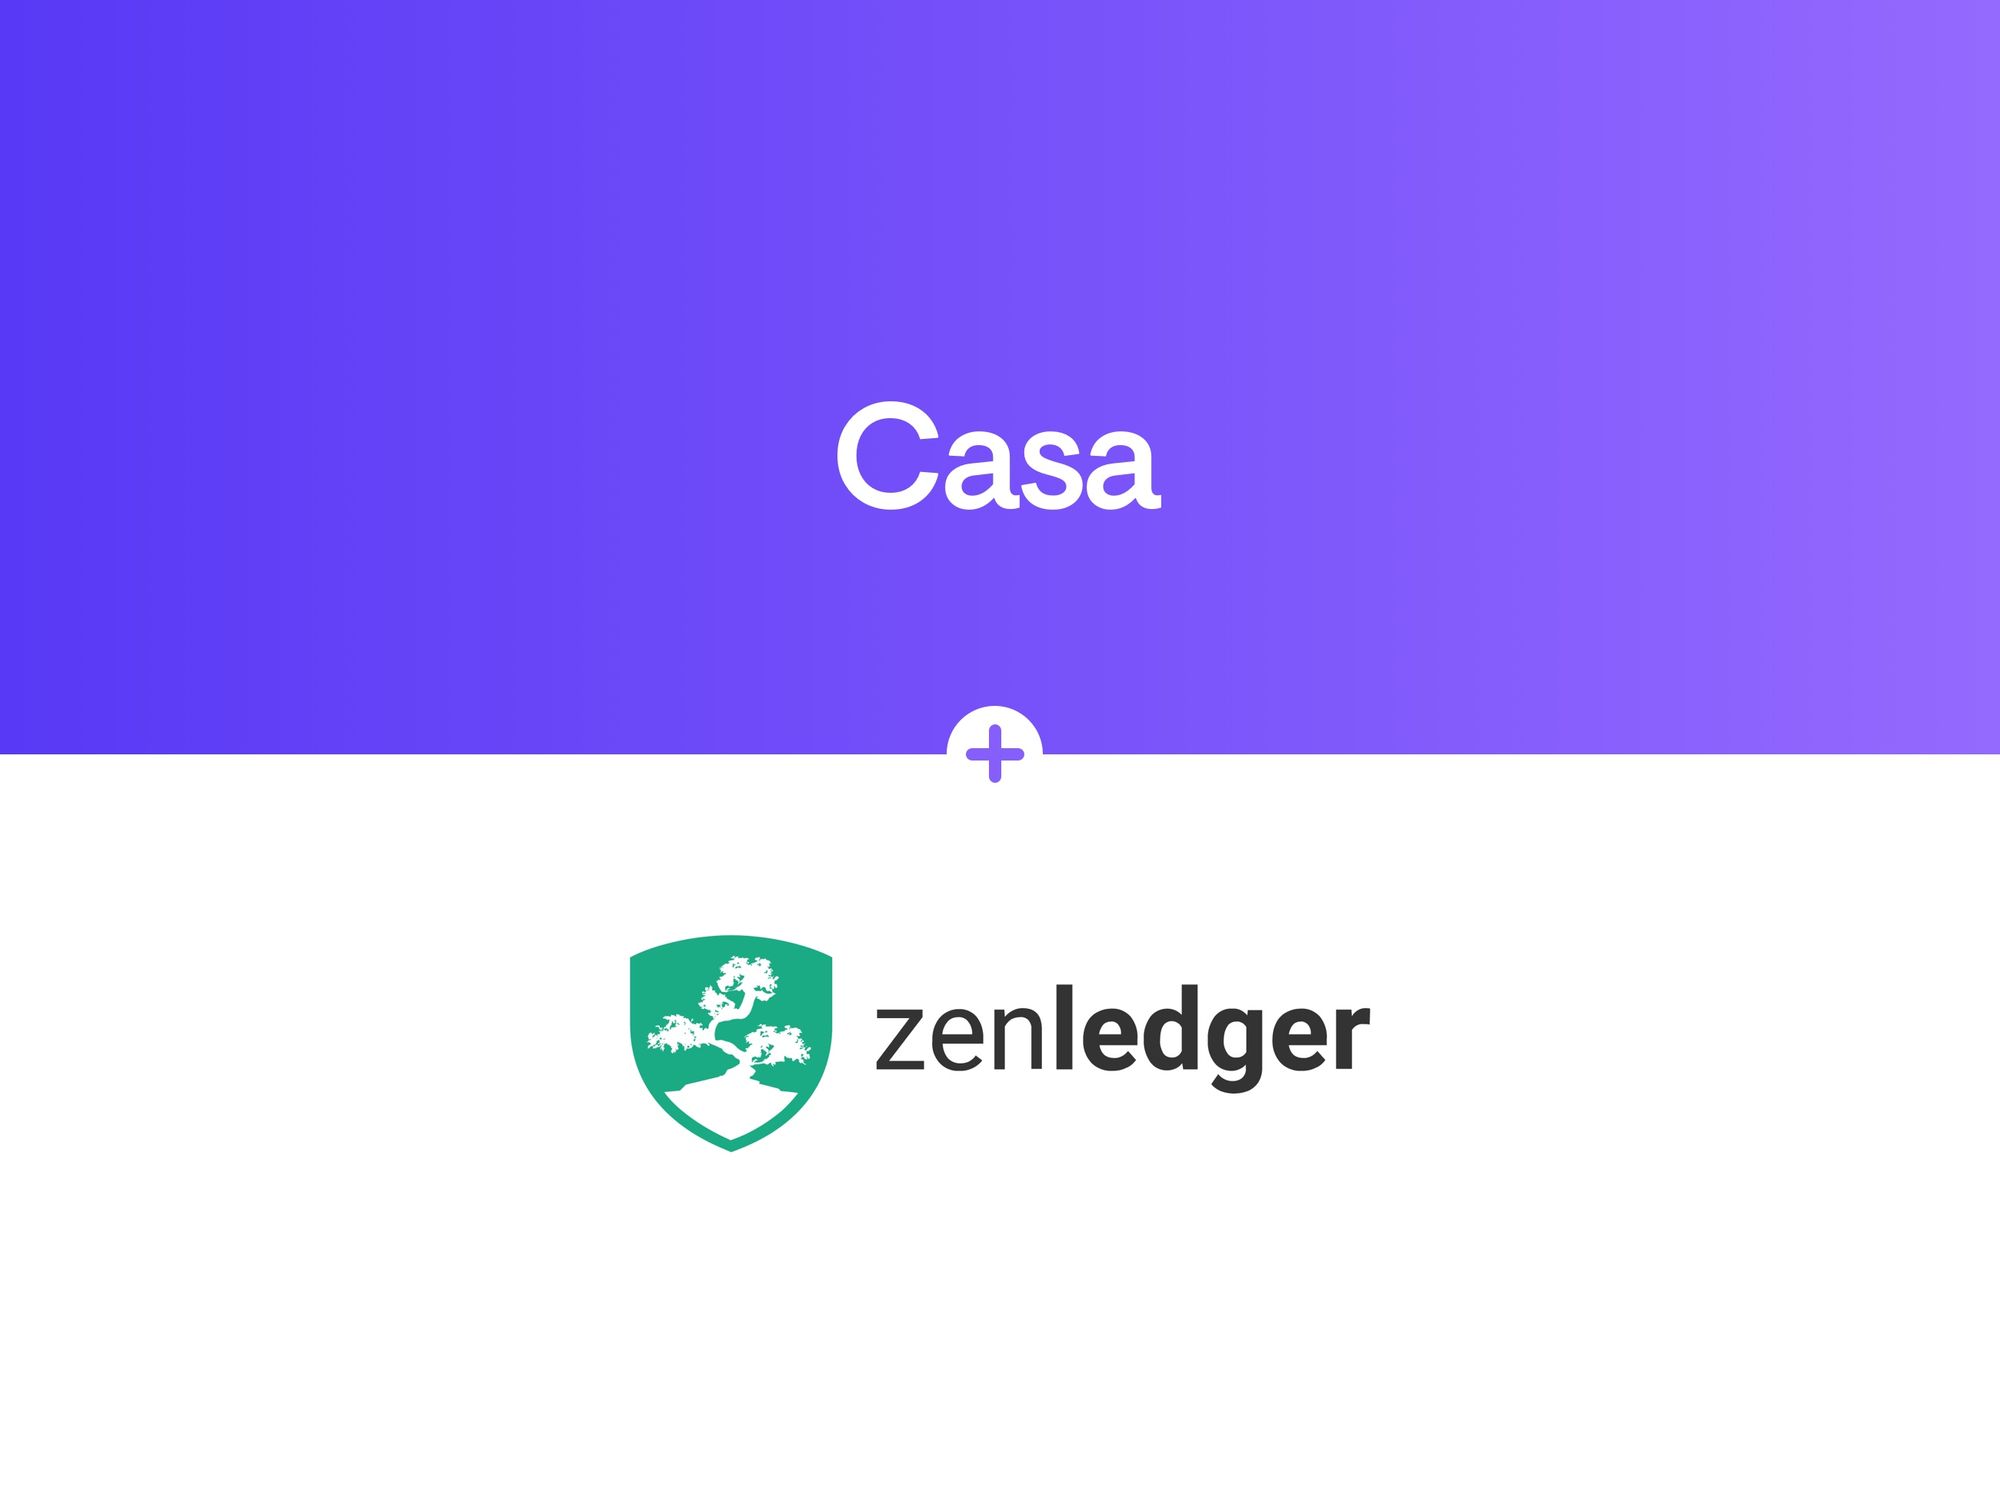 Zenledger discount now live